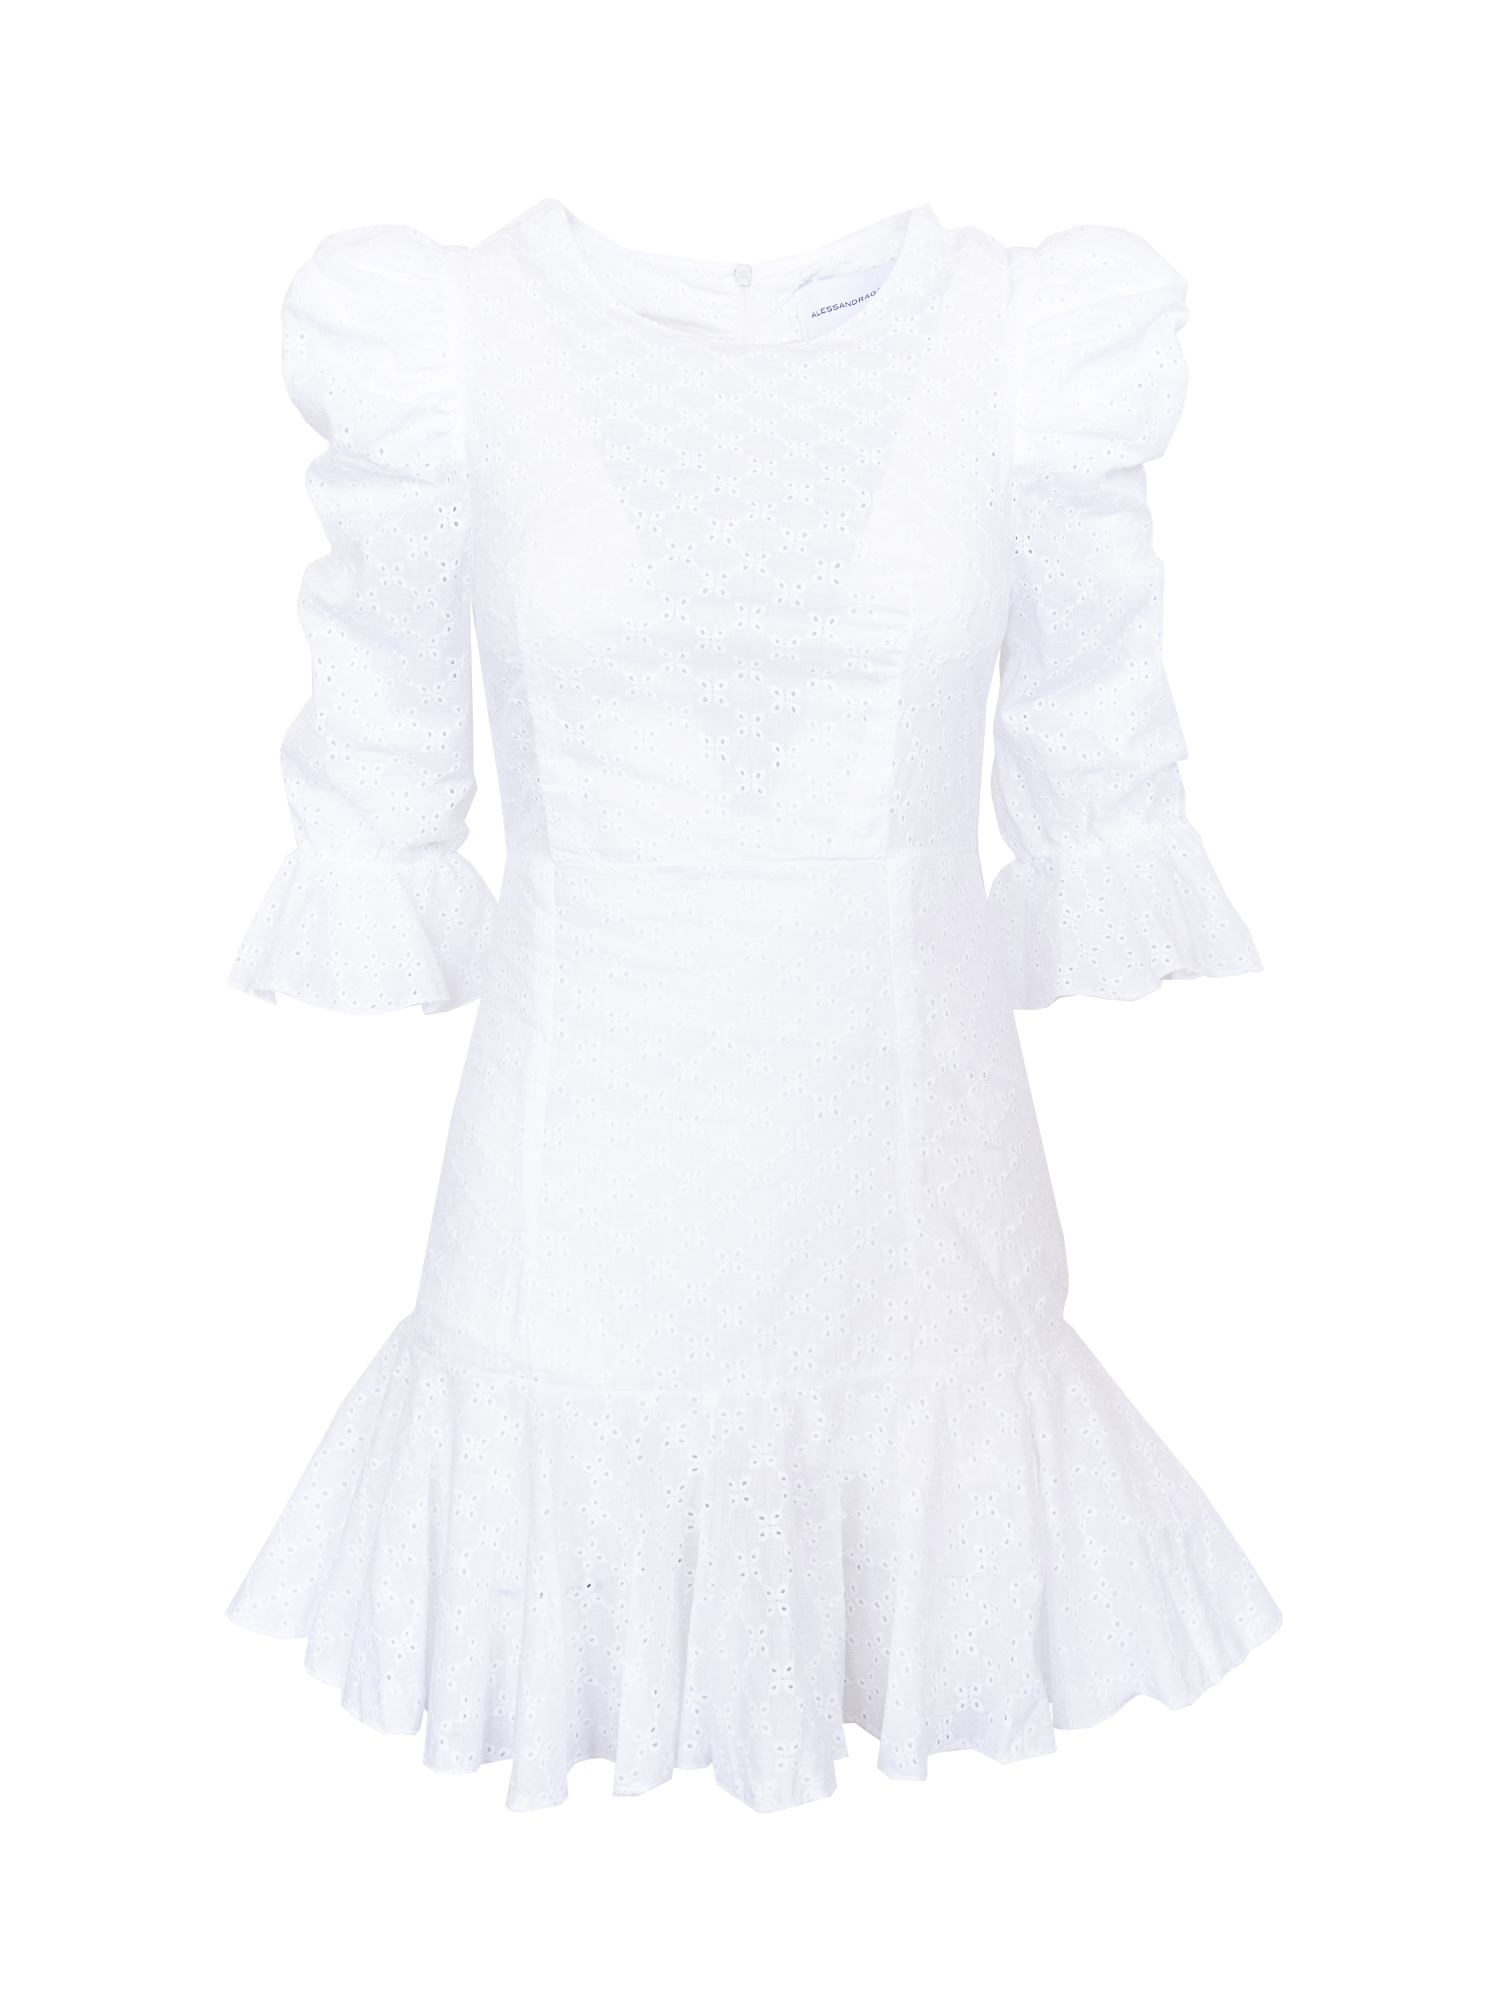 ANDREA - short sangallo dress